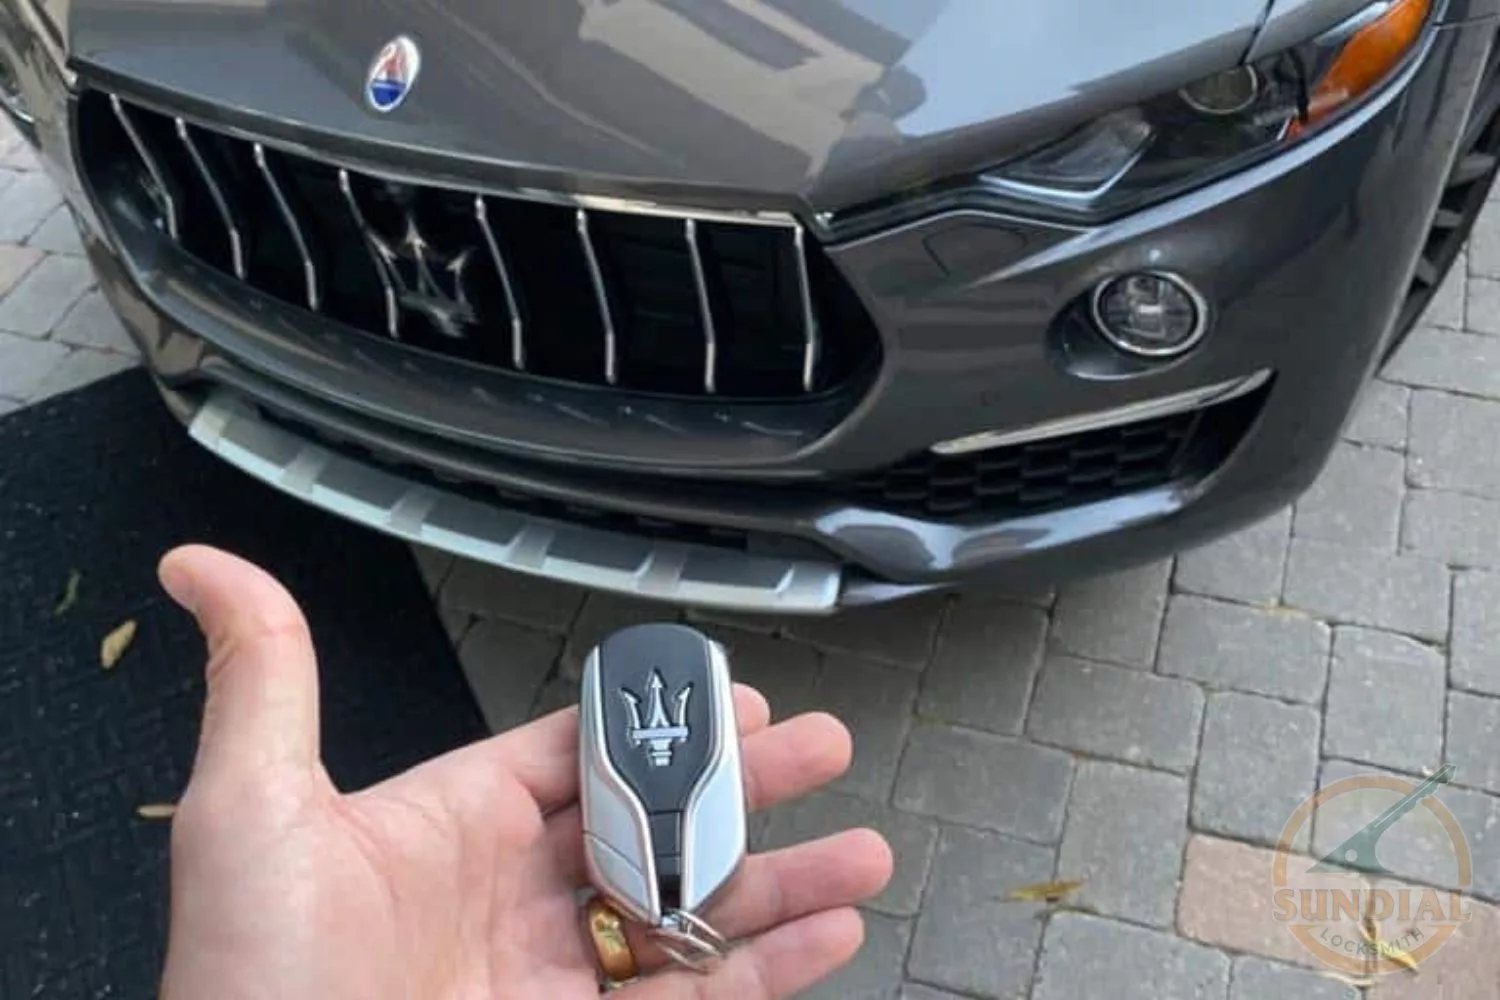 Hand holding a Maserati car key fob.